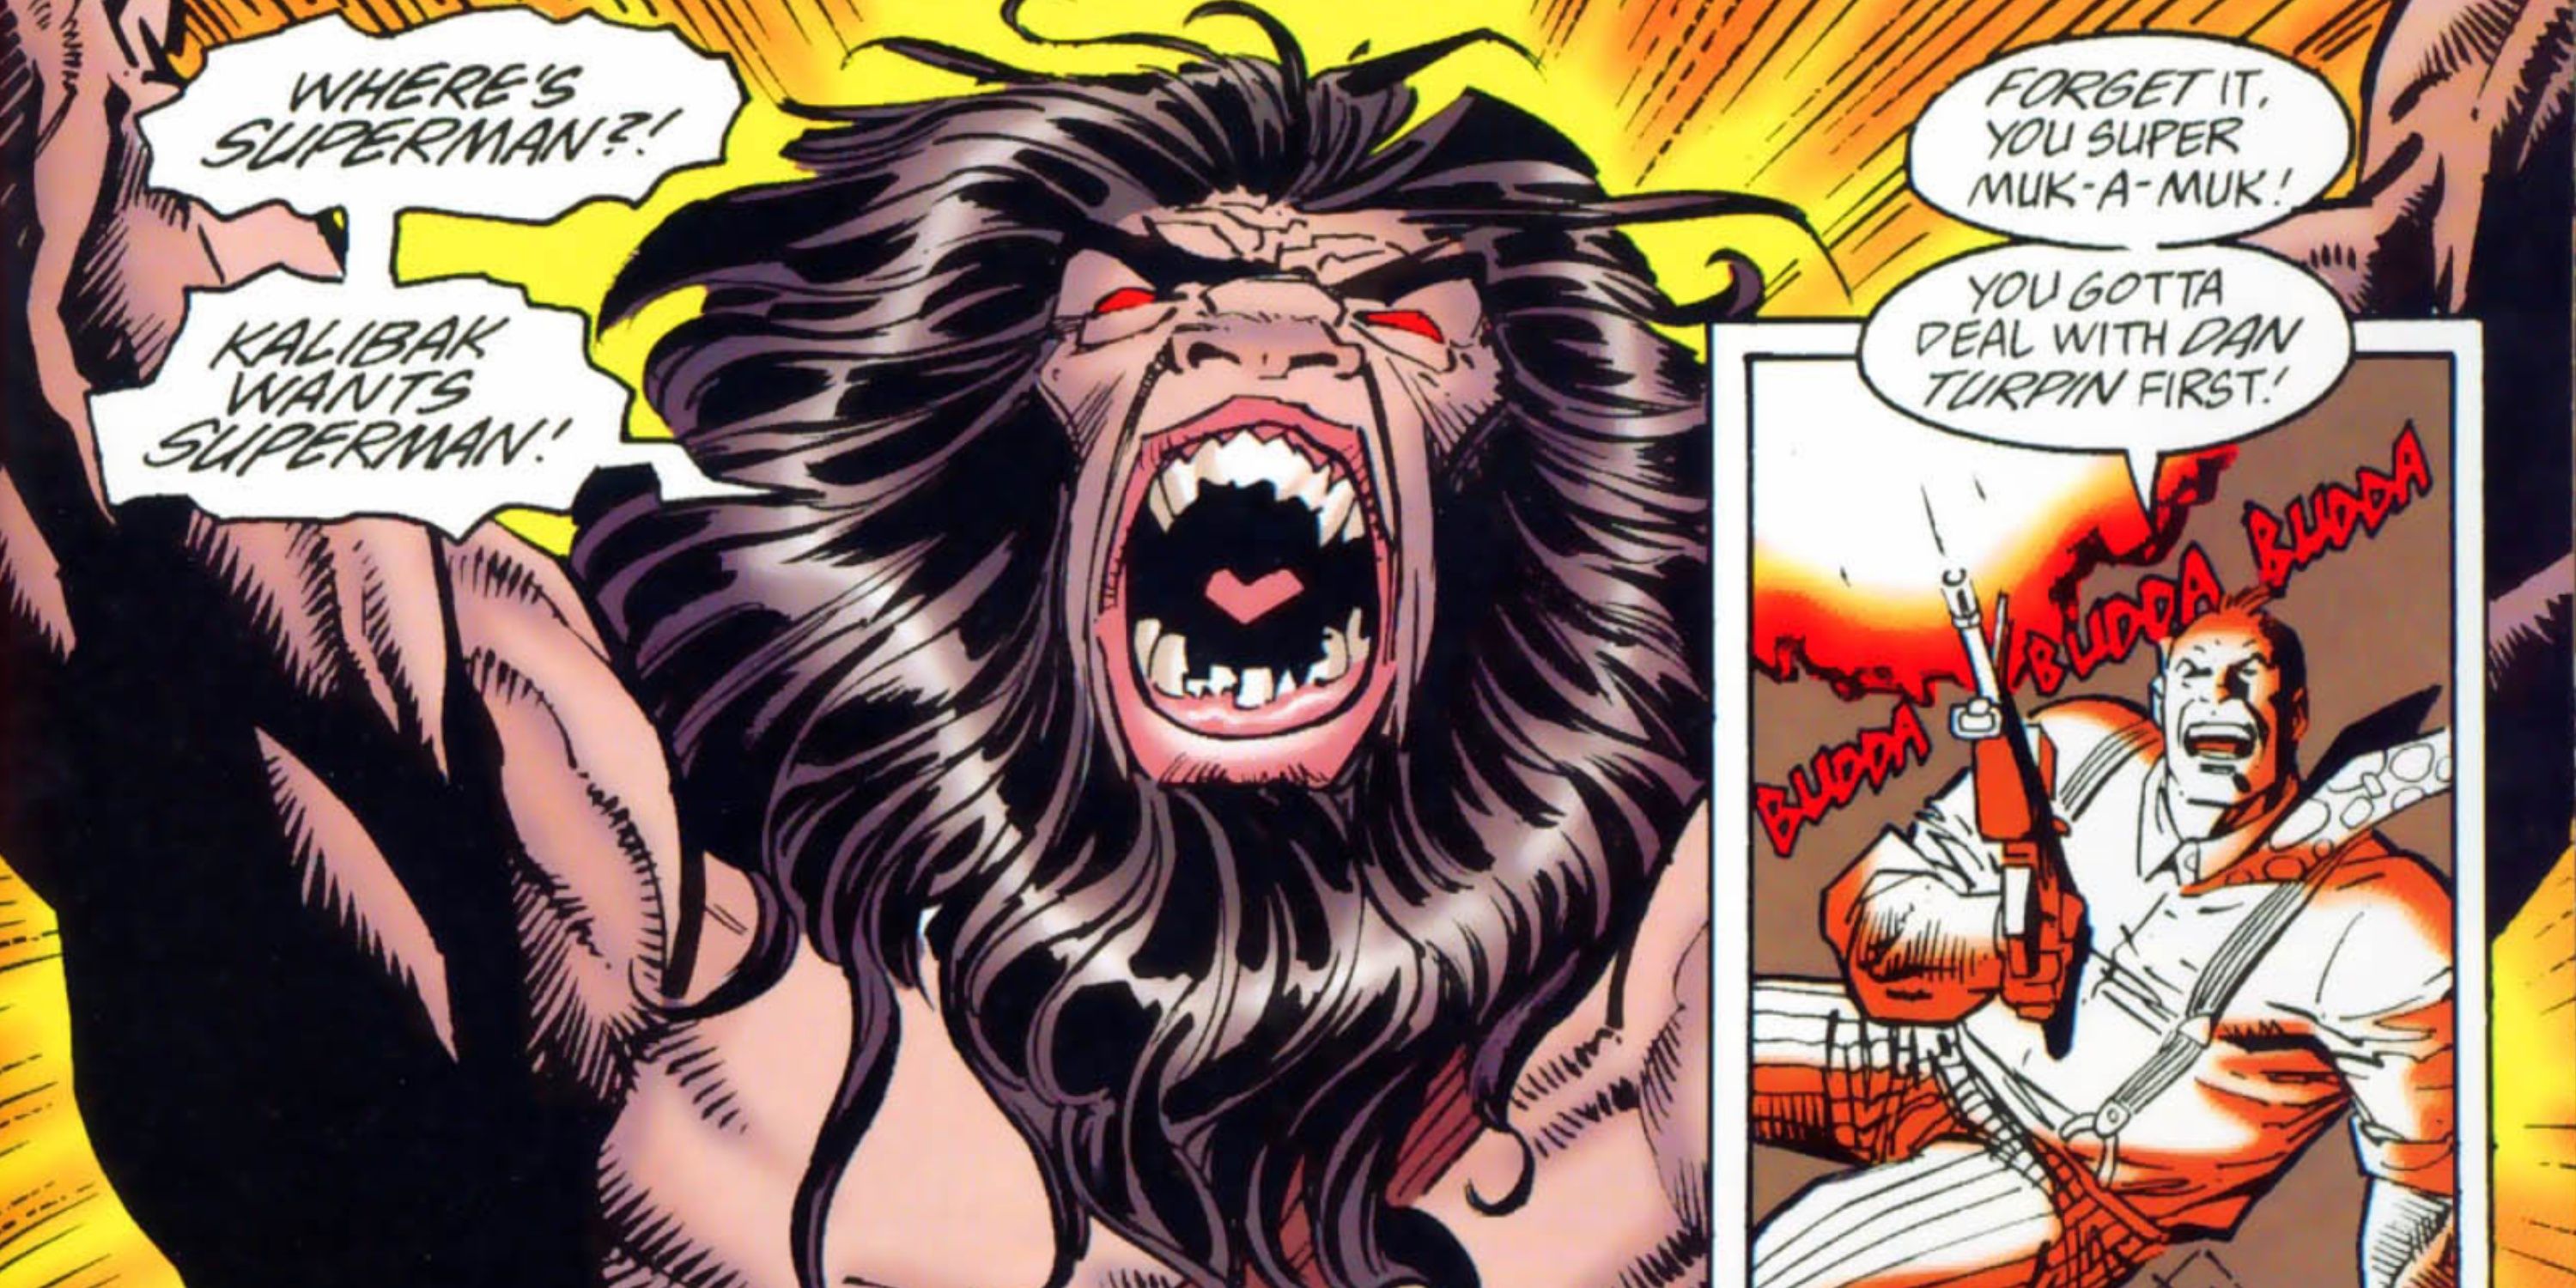 Dan Turpin shoots at Kalibak as he demands Superman fight him in DC Comics